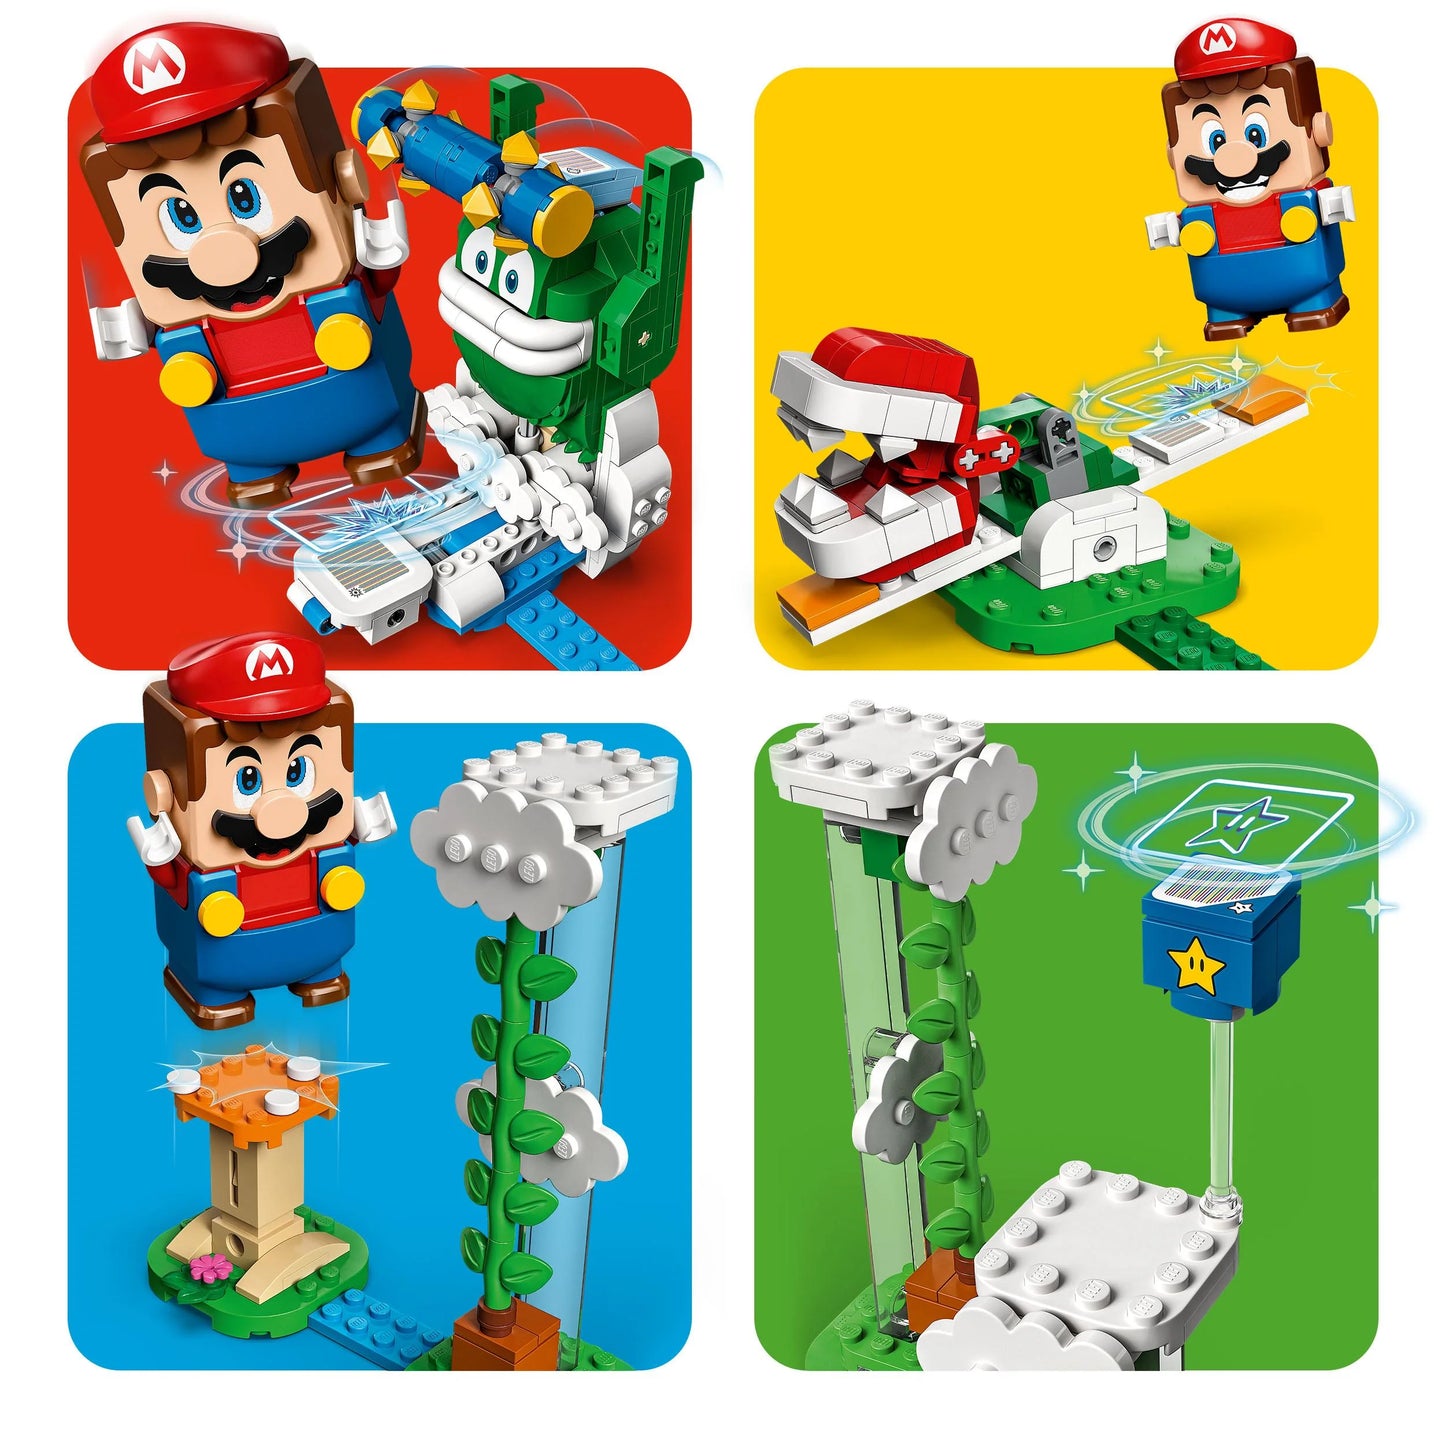 Expansion Set: Giant Spikes Cloudtop Challenge - LEGO Super Mario